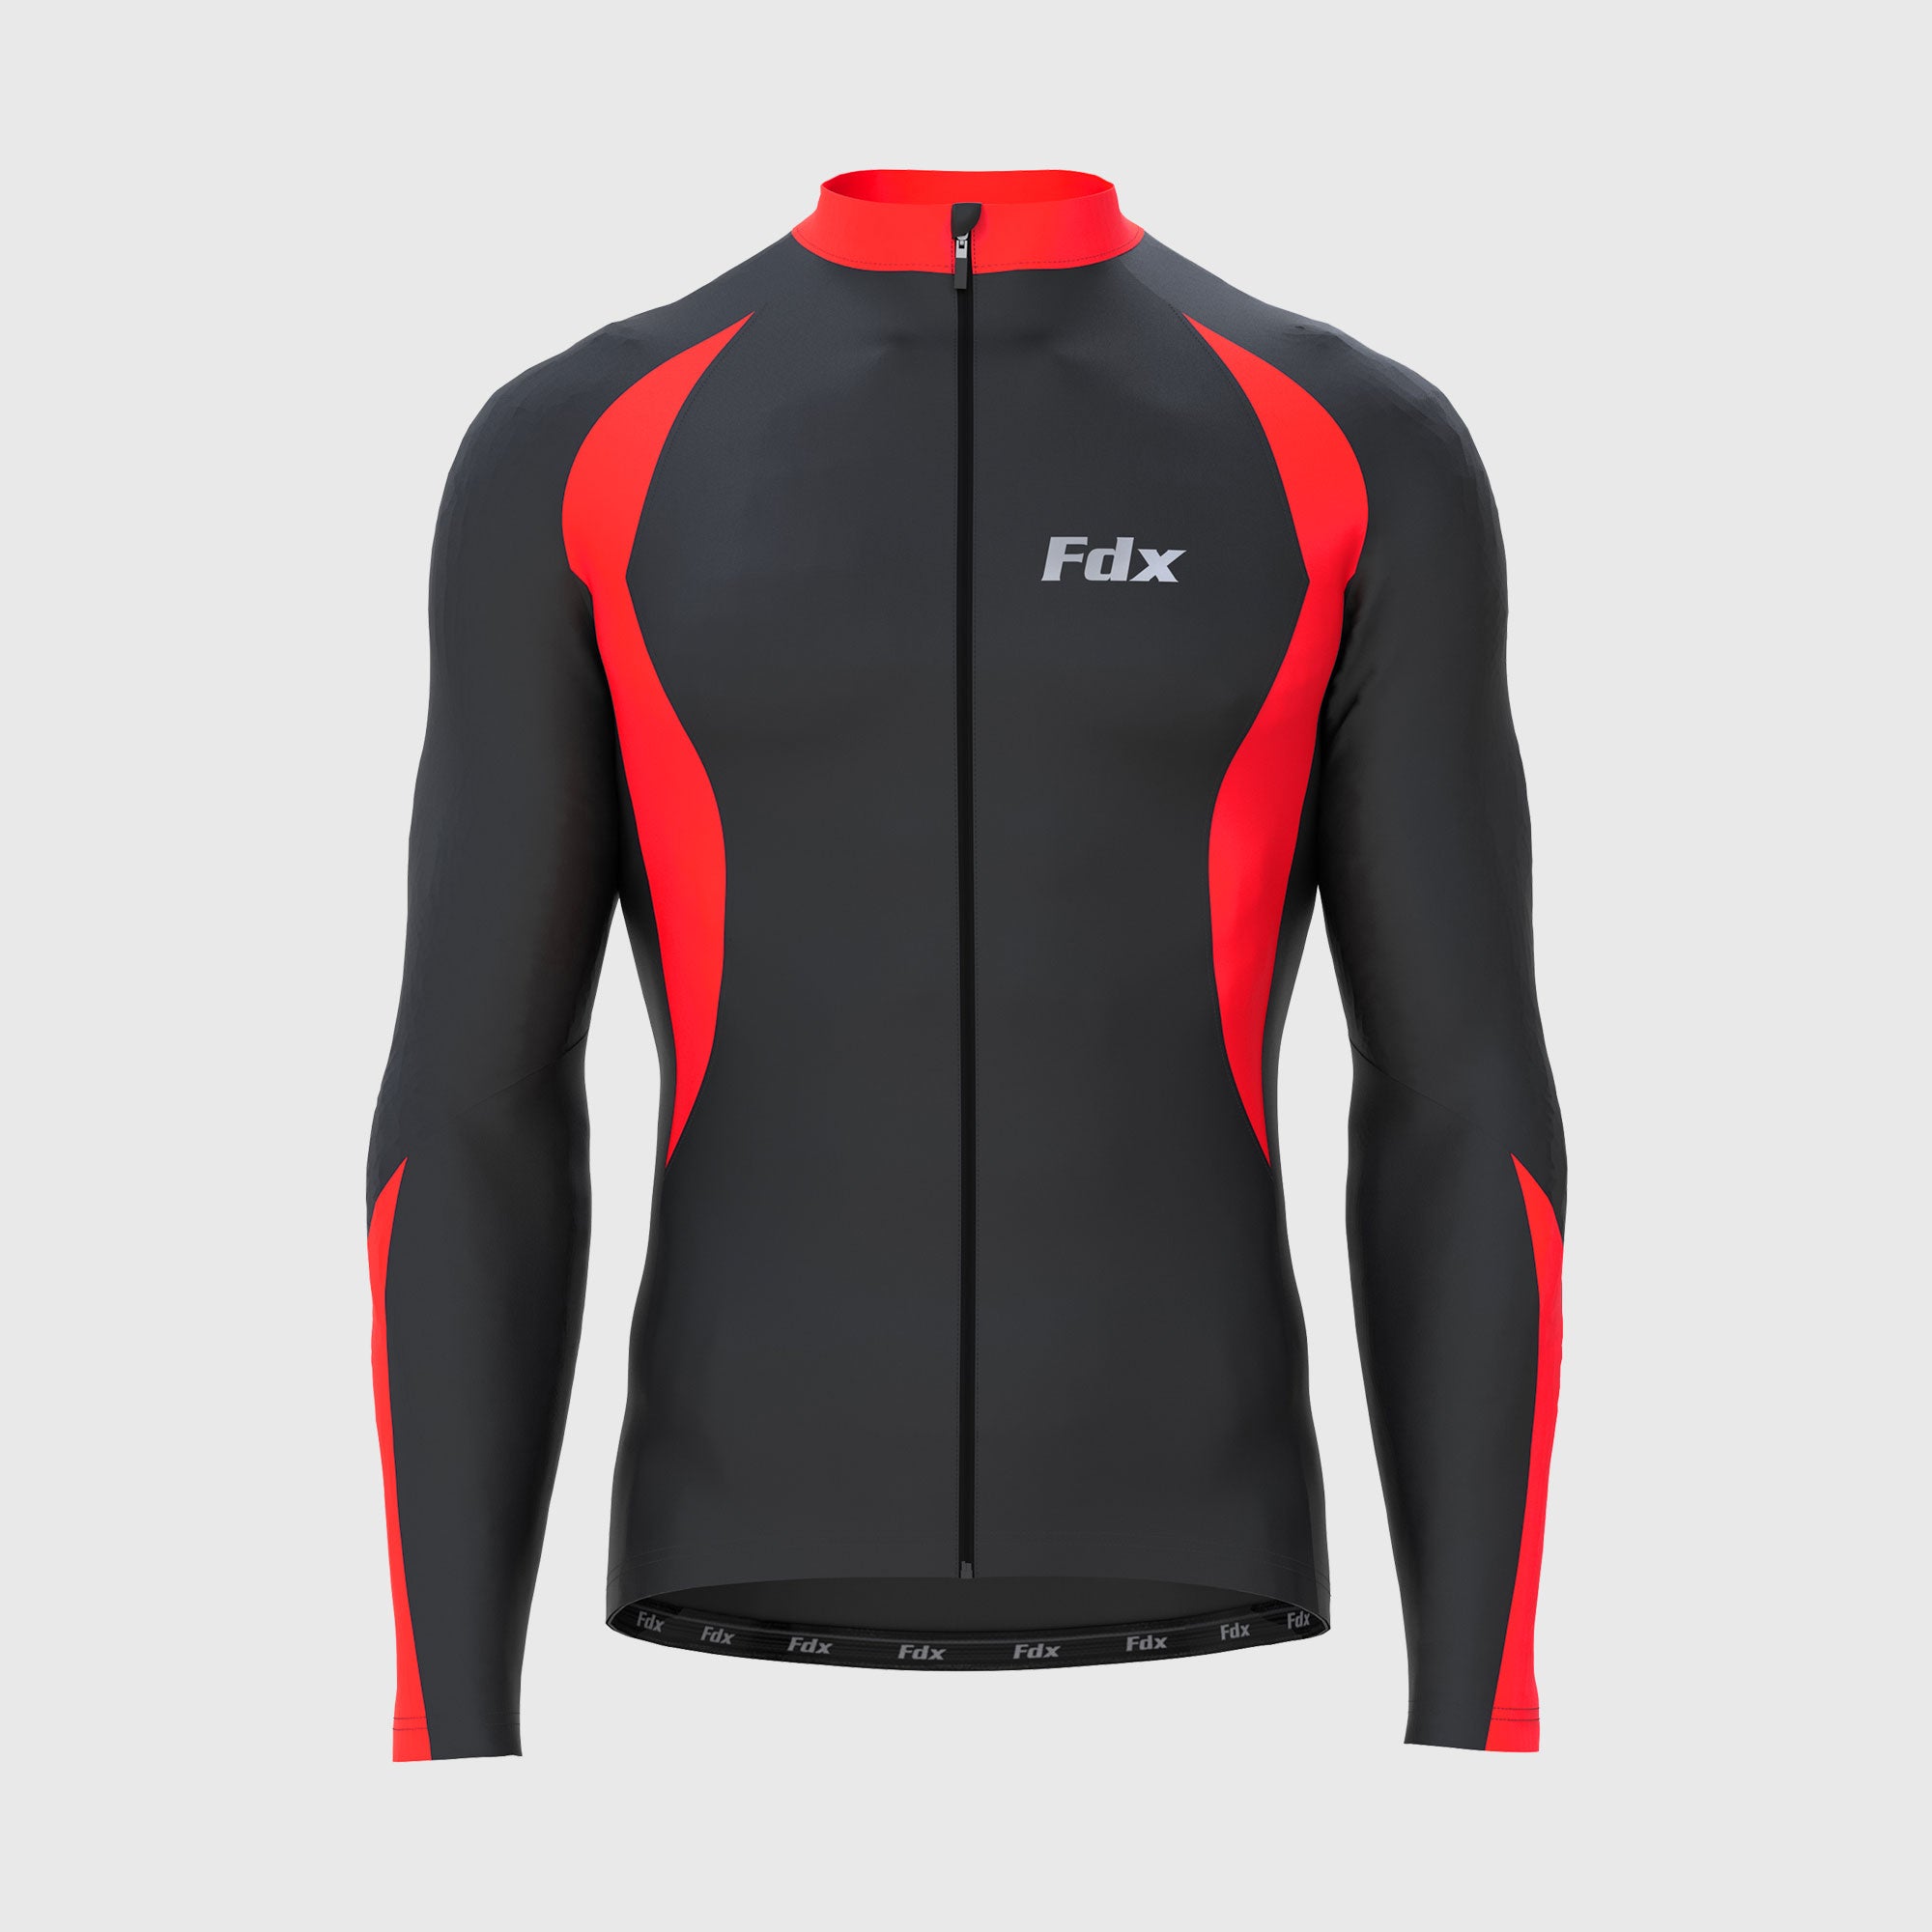 Fdx Mens Black & Red Long Sleeve Cycling Jersey for Winter Roubaix Thermal Fleece Road Bike Wear Top Full Zipper, Pockets & Hi-viz Reflectors - Viper